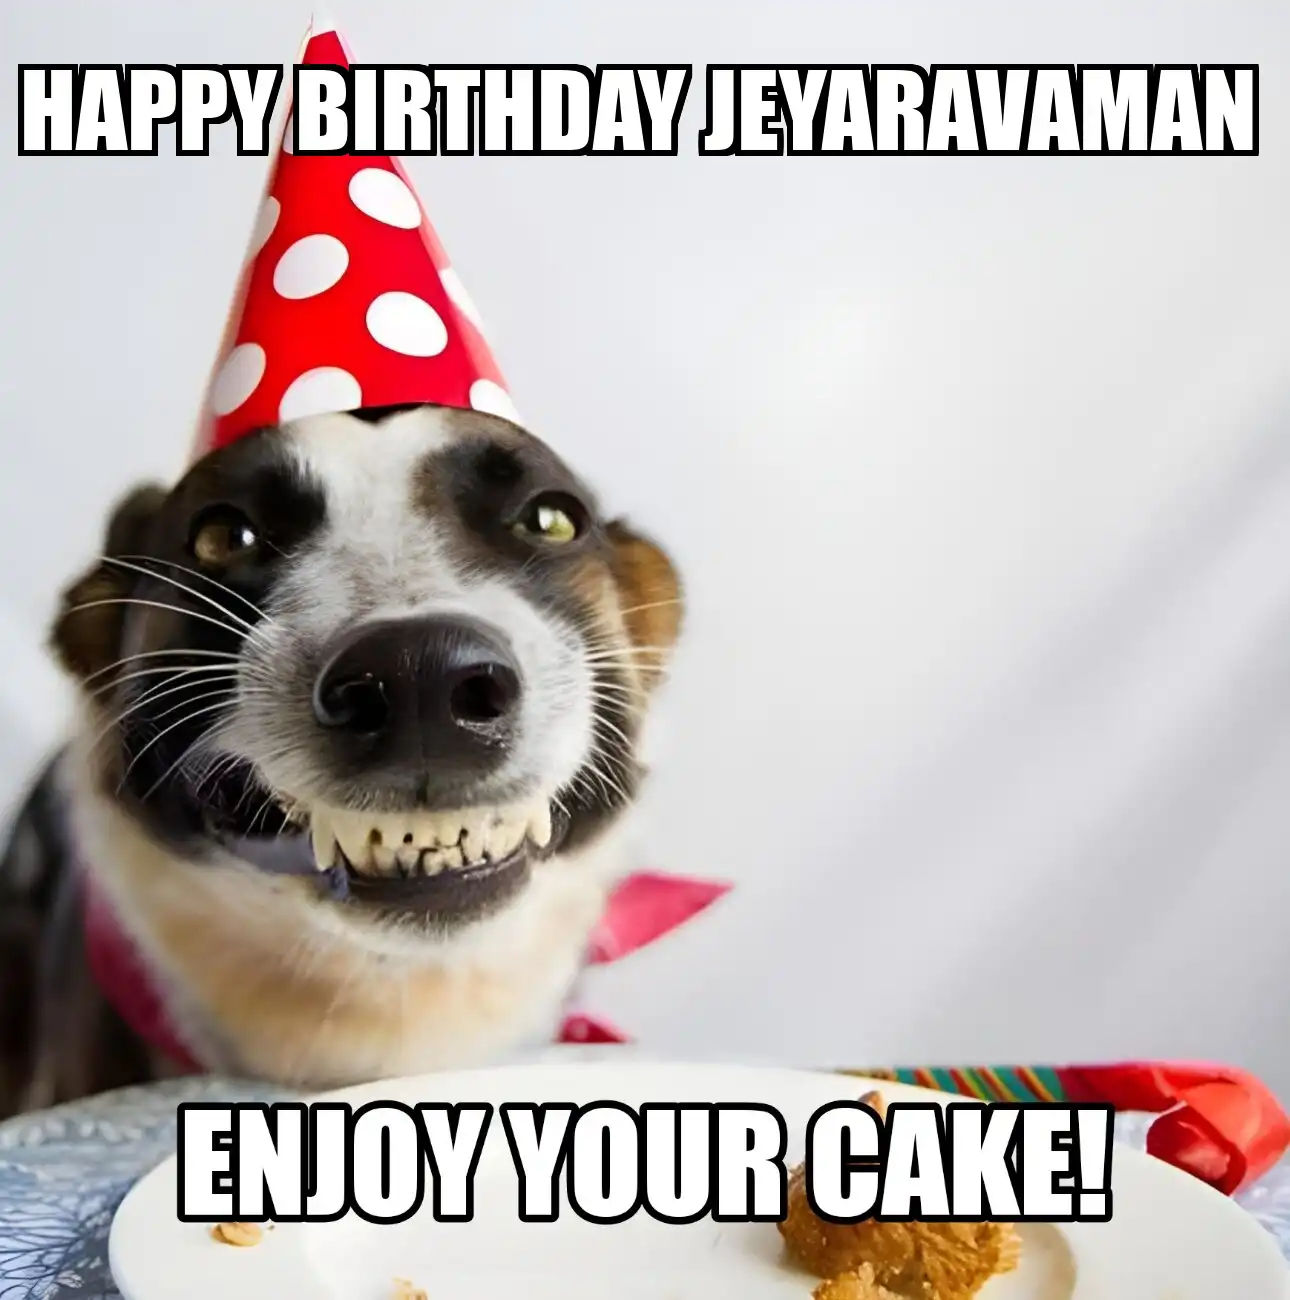 Happy Birthday Jeyaravaman Enjoy Your Cake Dog Meme